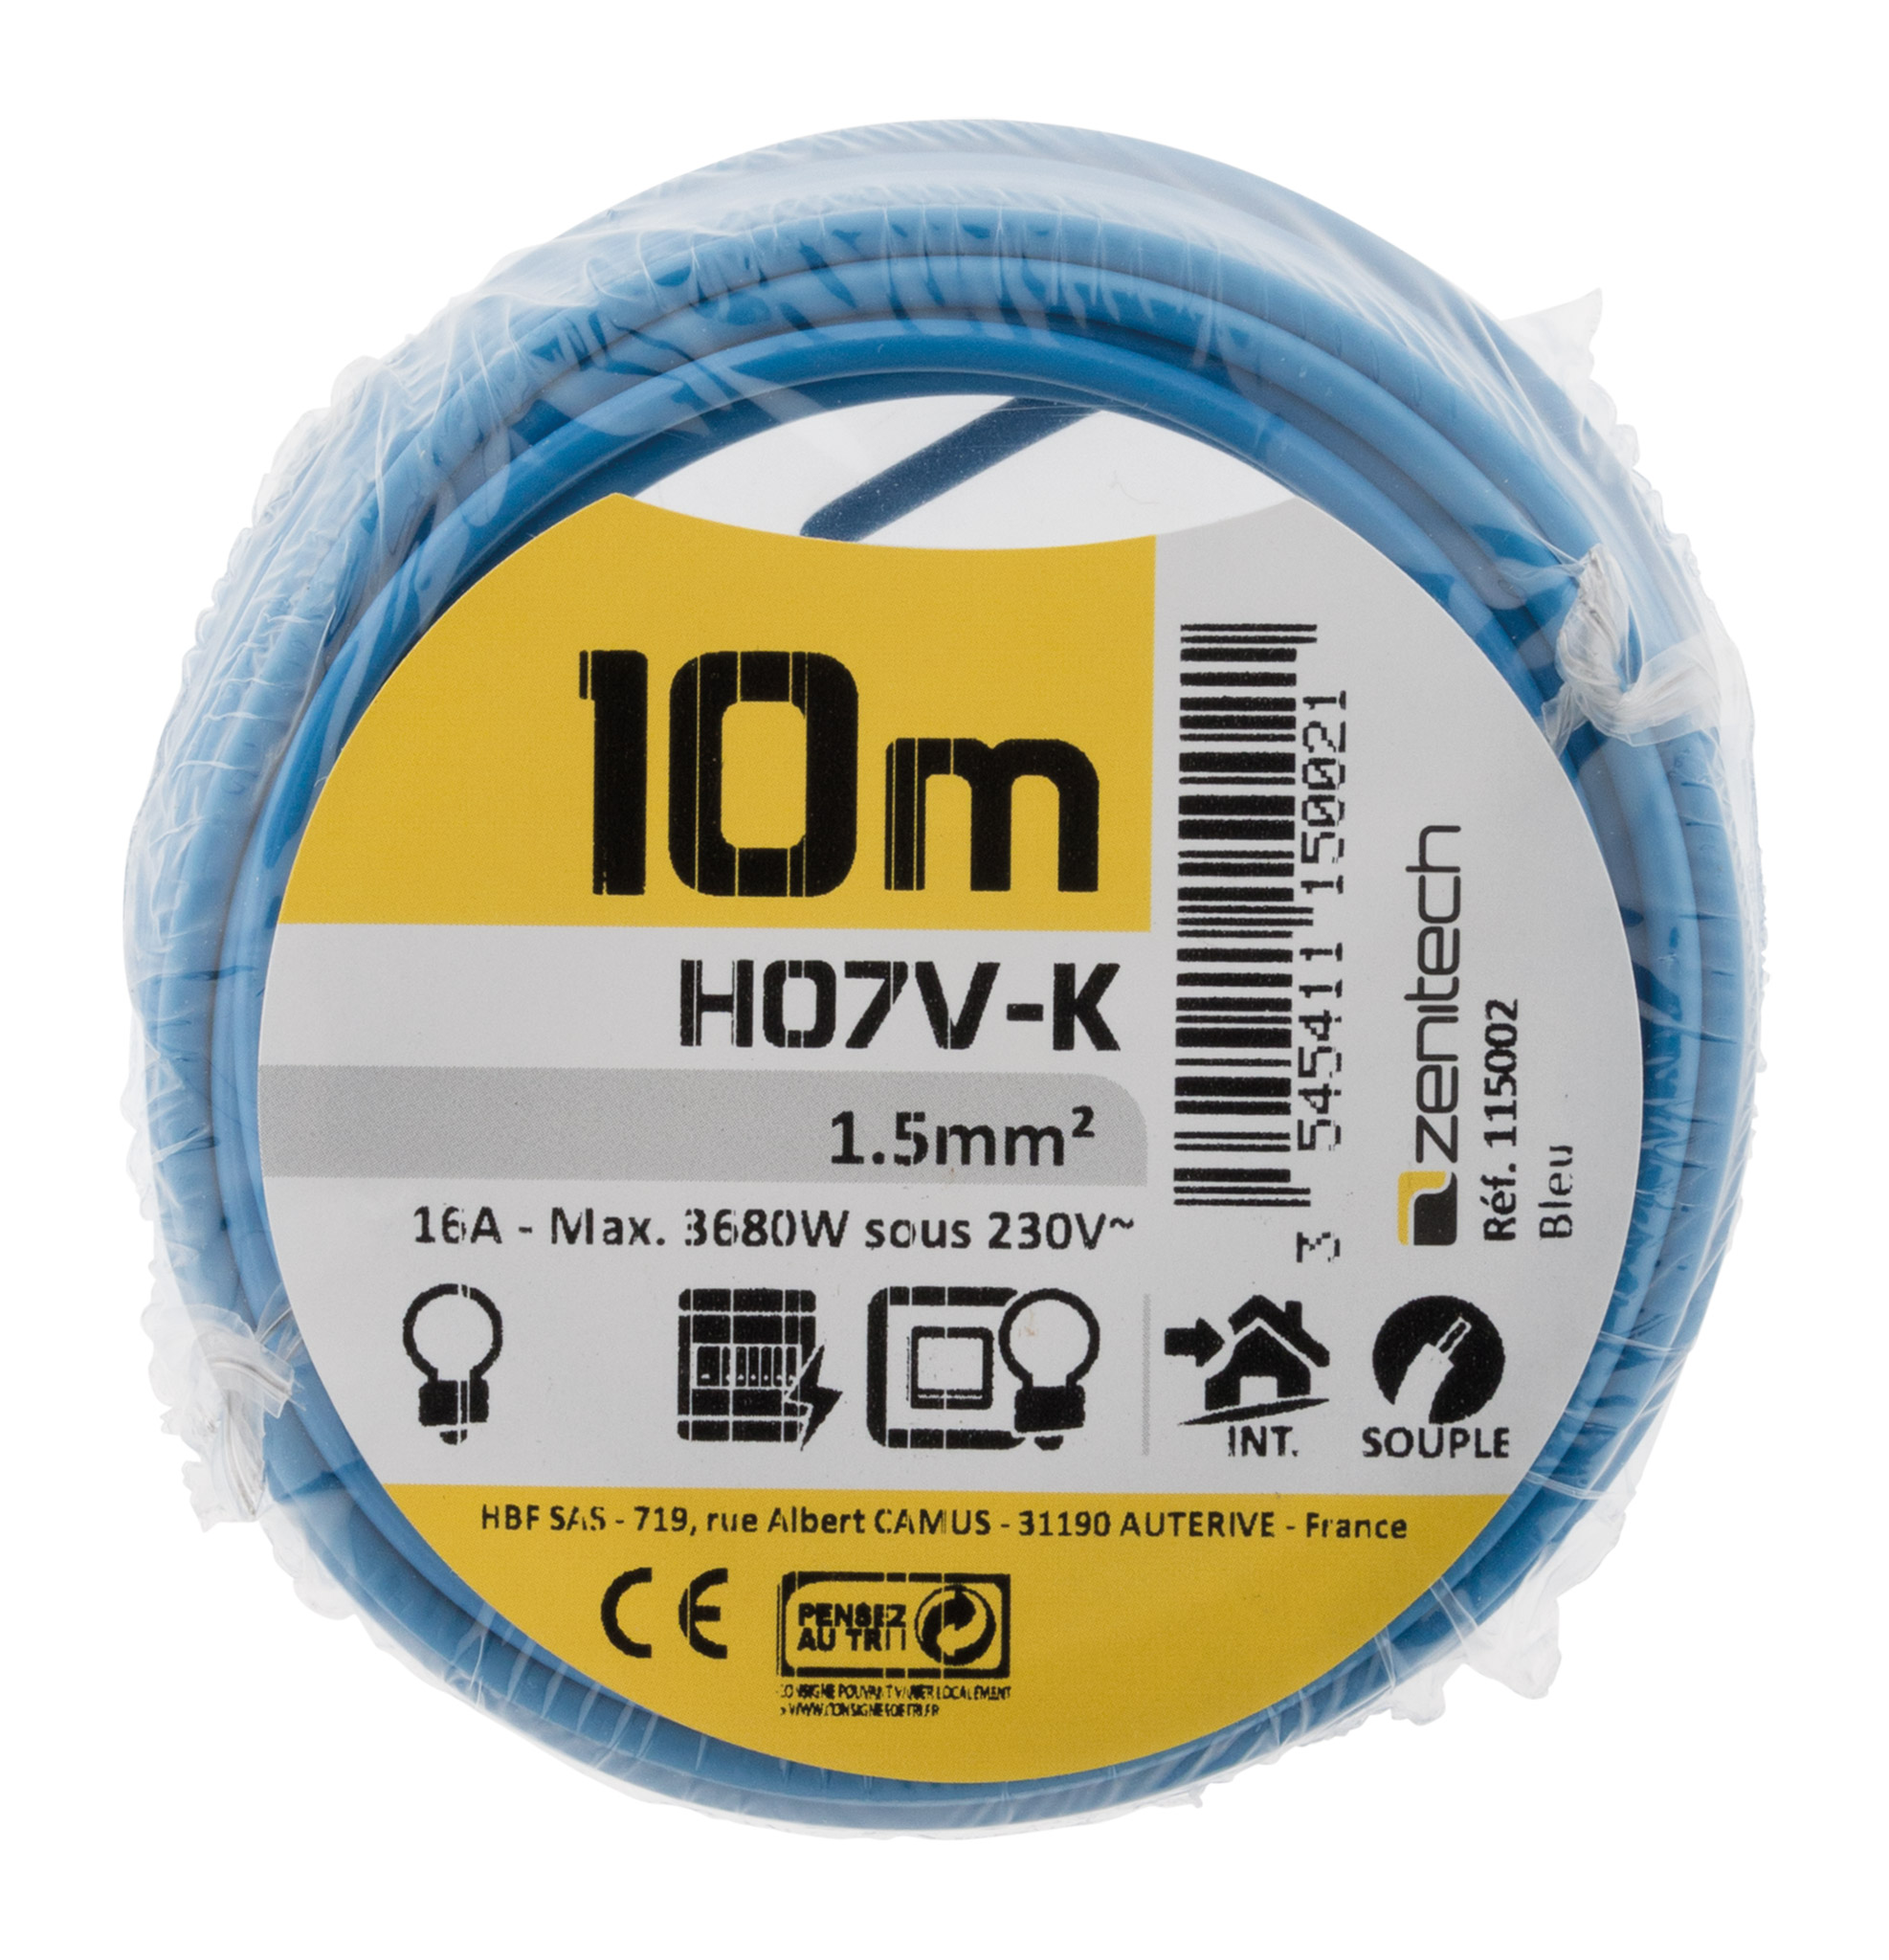 Cable ho7vk 1.5 bleu 10m - plasto - INOTECH